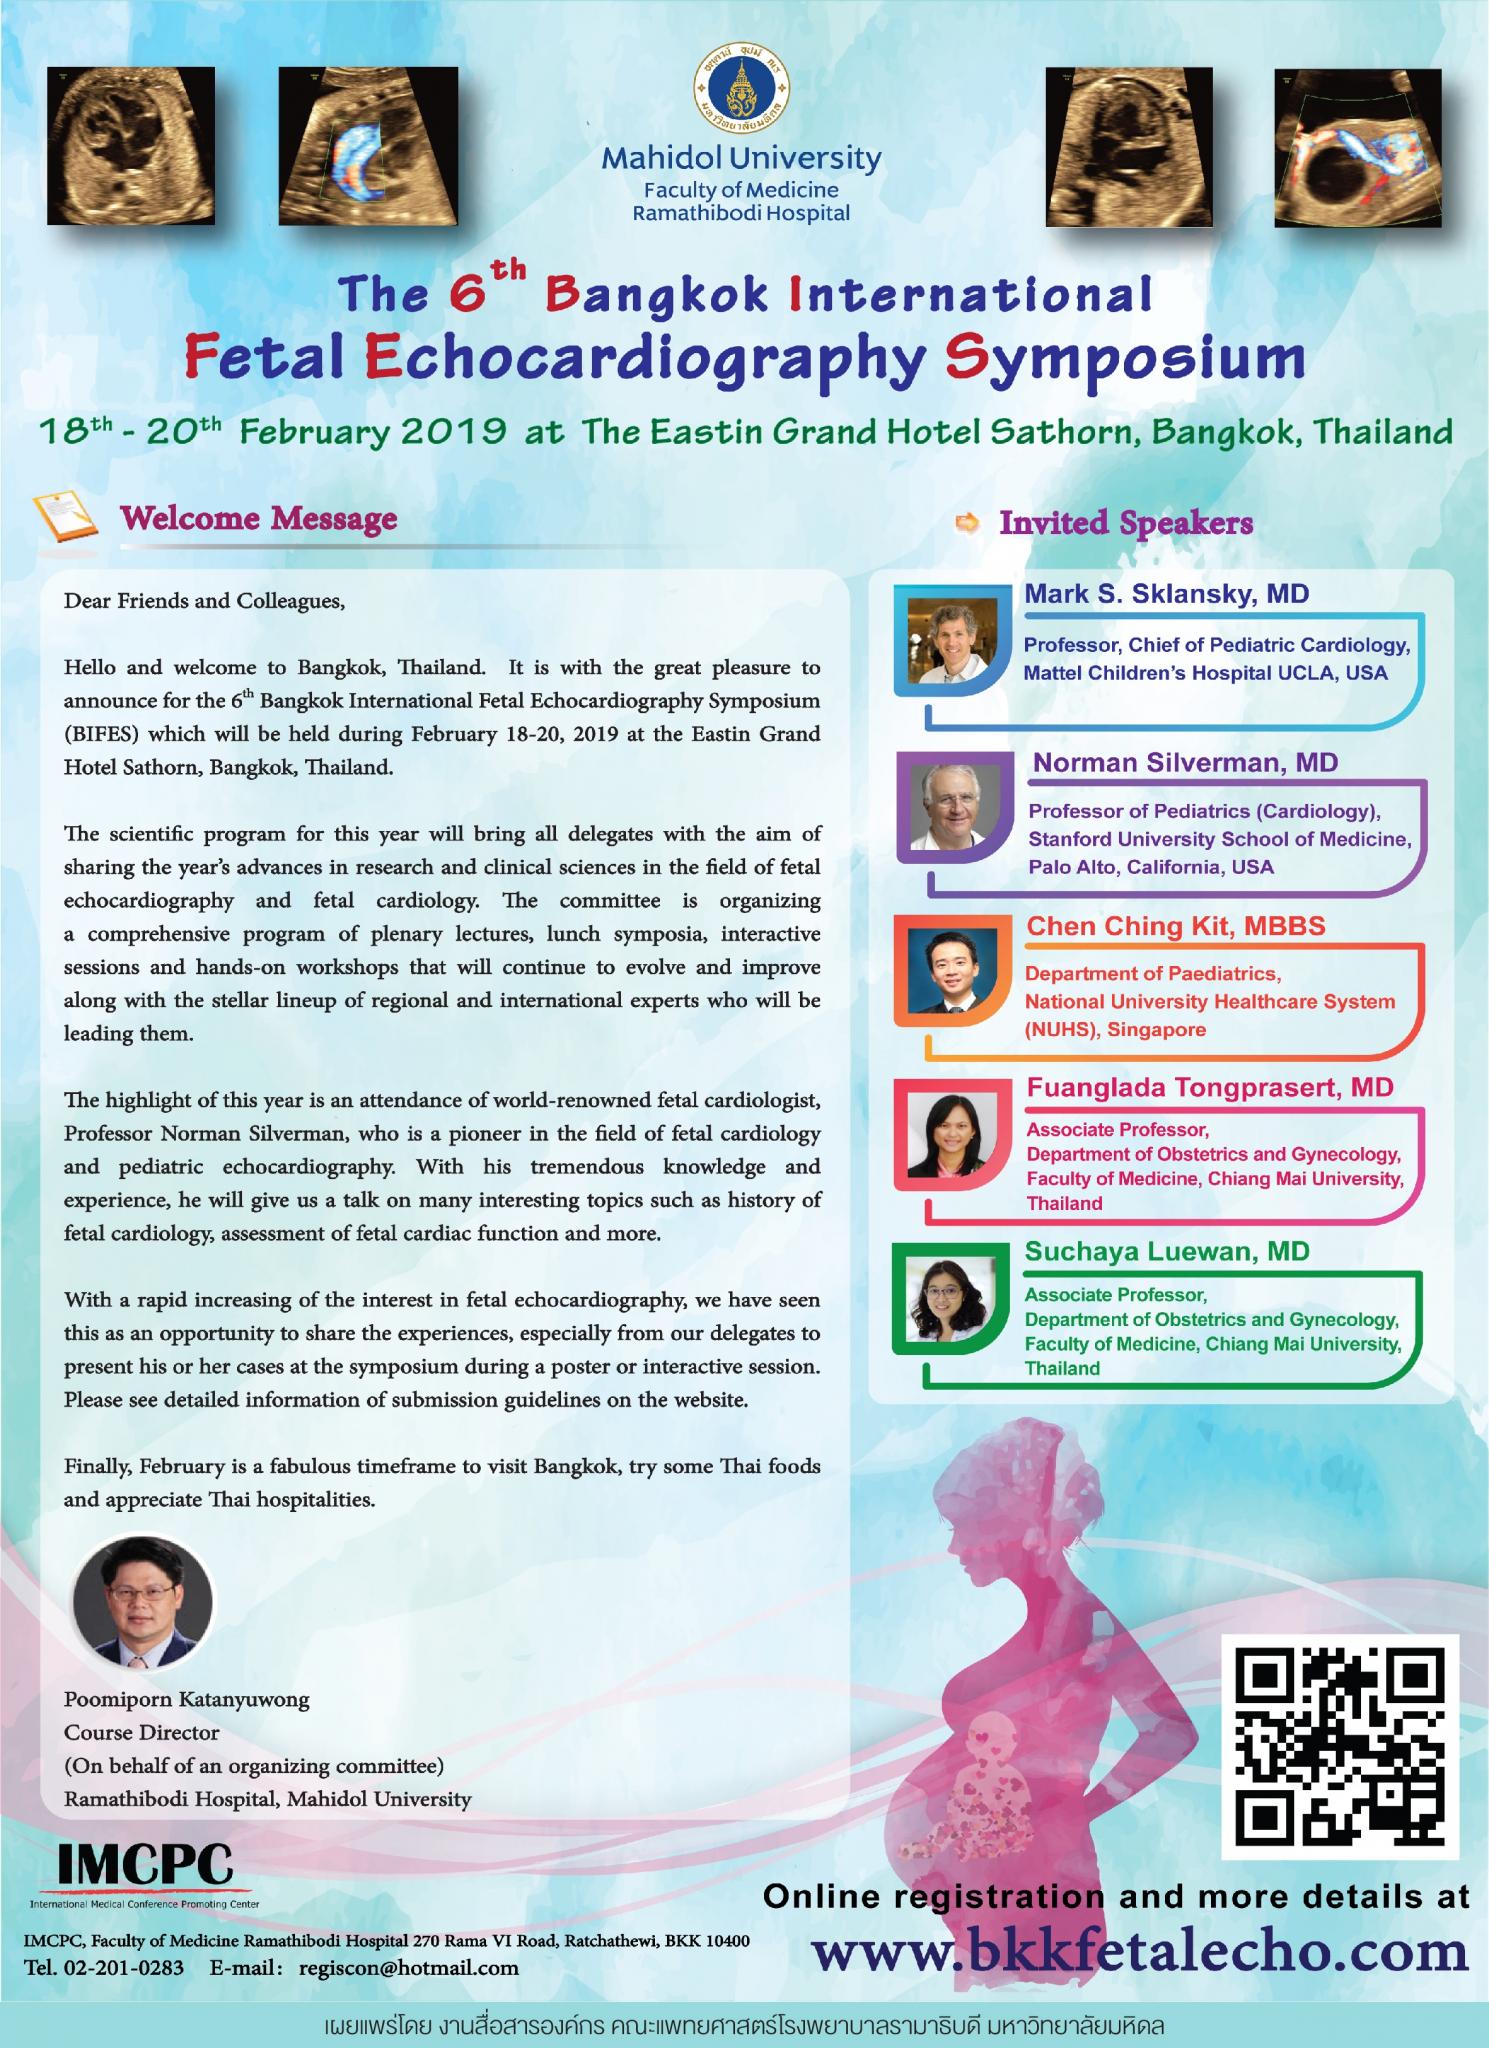 The 6th Bangkok International Fetal Echocardiography Symposium